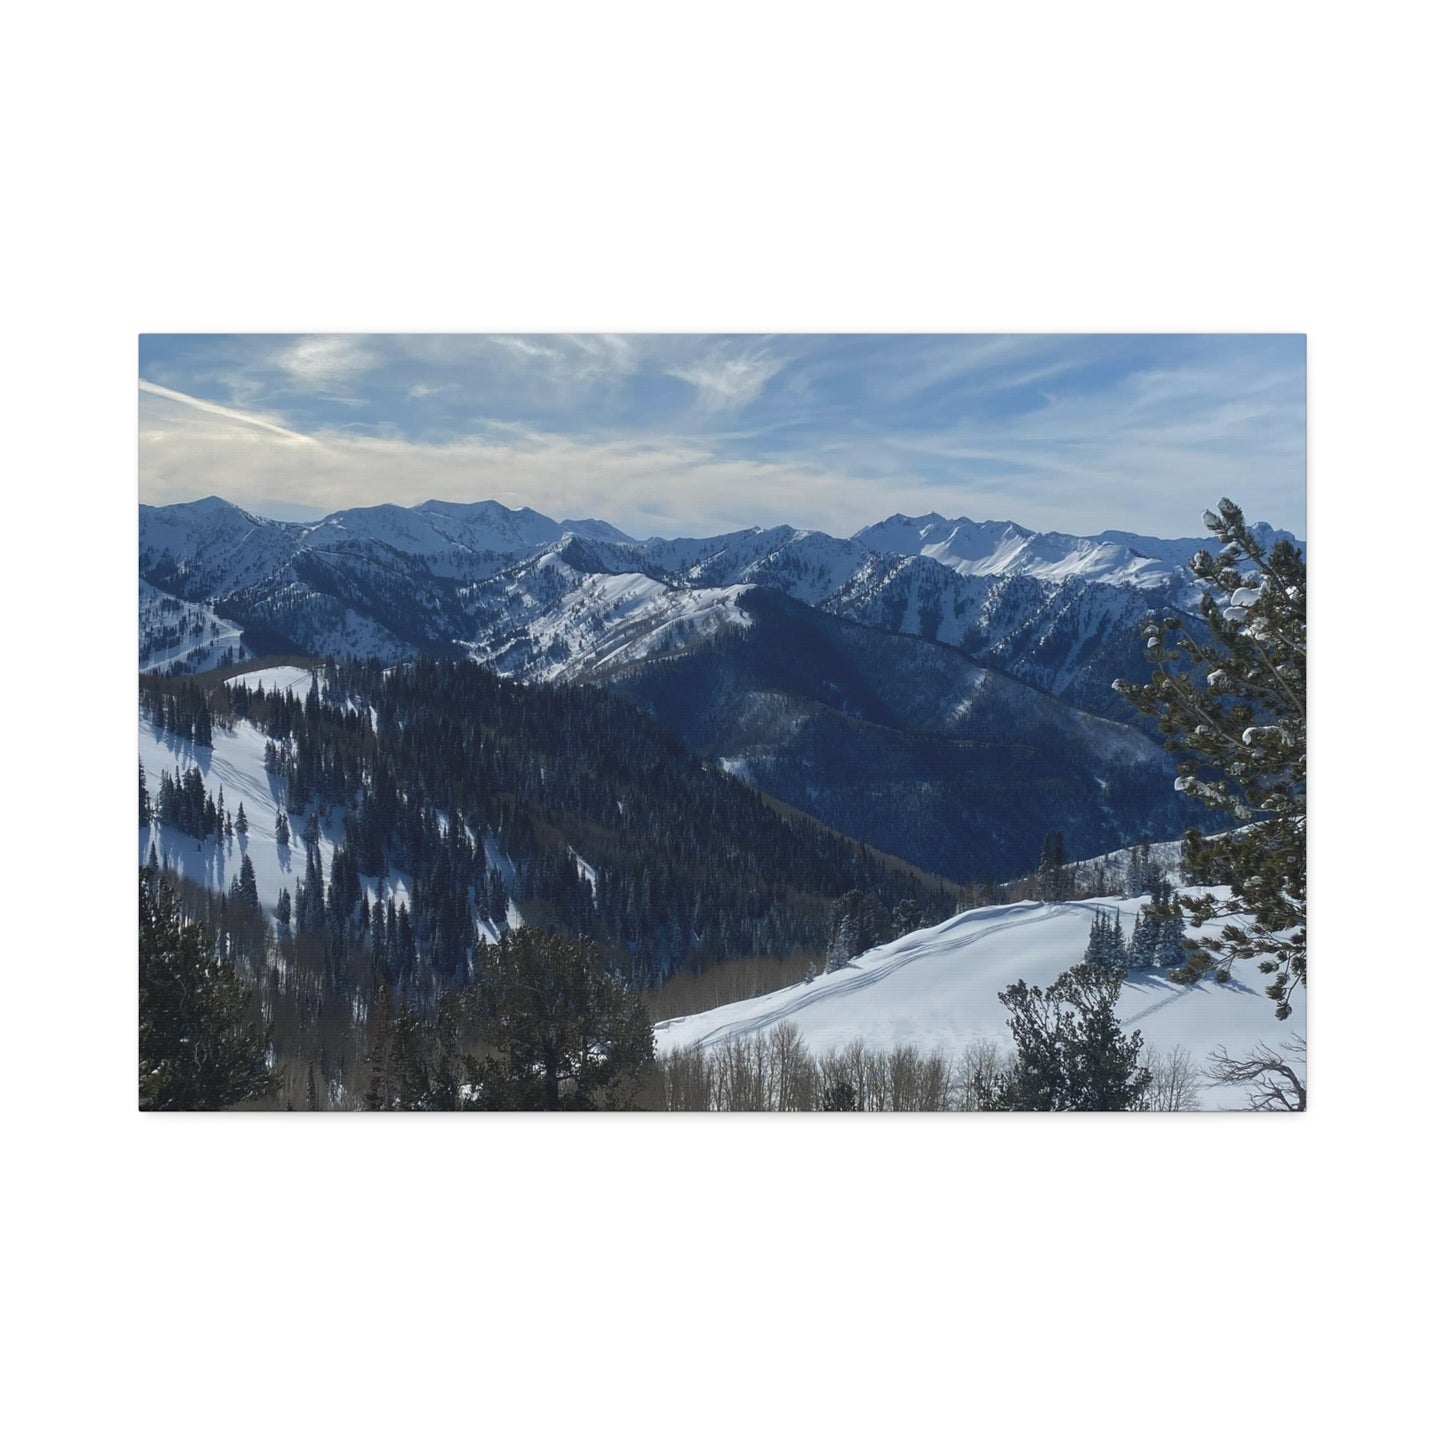 Backcountry View, Canyons, Park City, Utah Canvas Wall Print (Free Shipping)